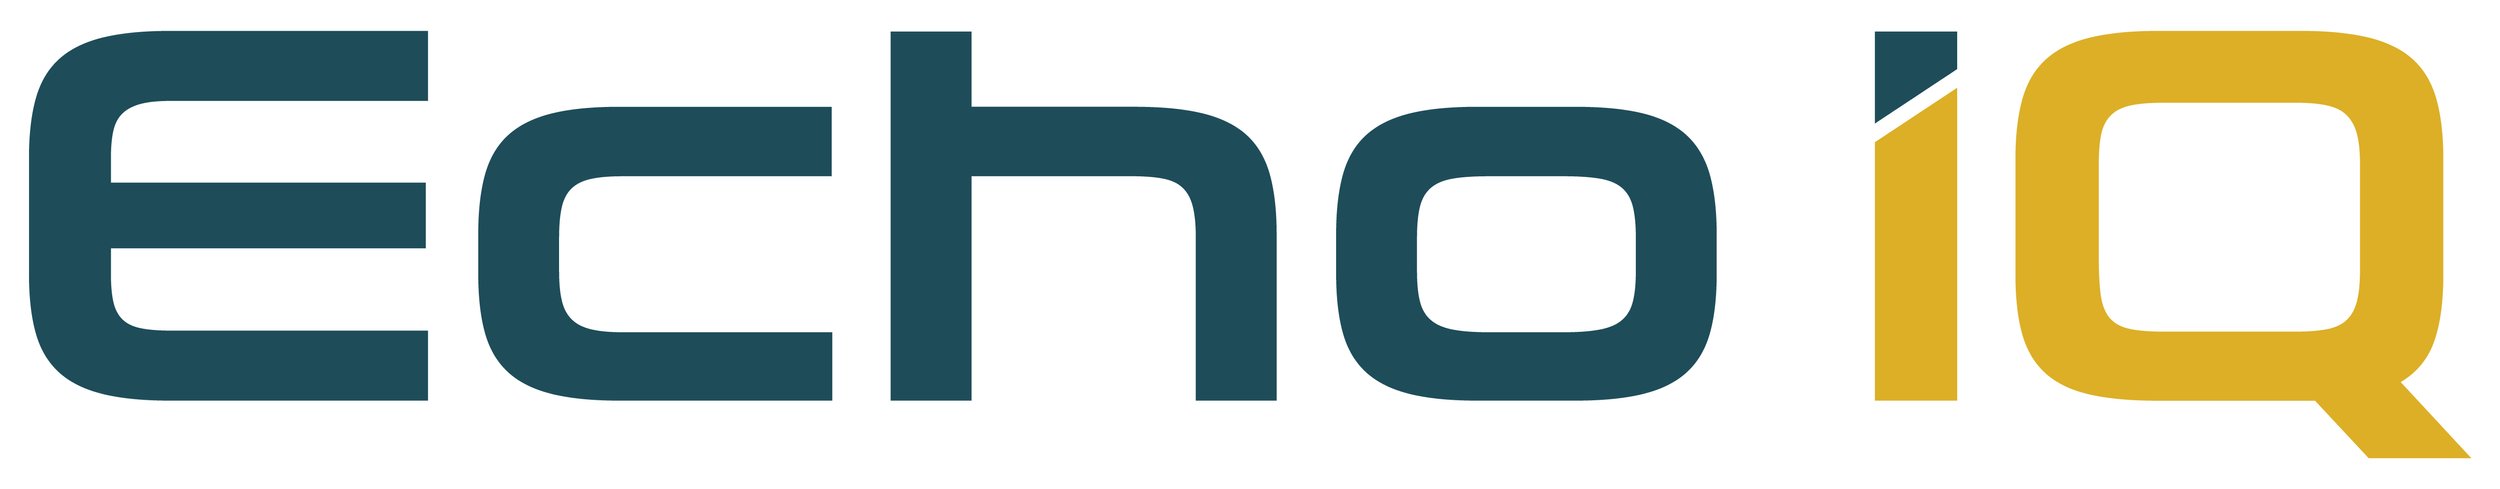 Echo IQ logo.jpg